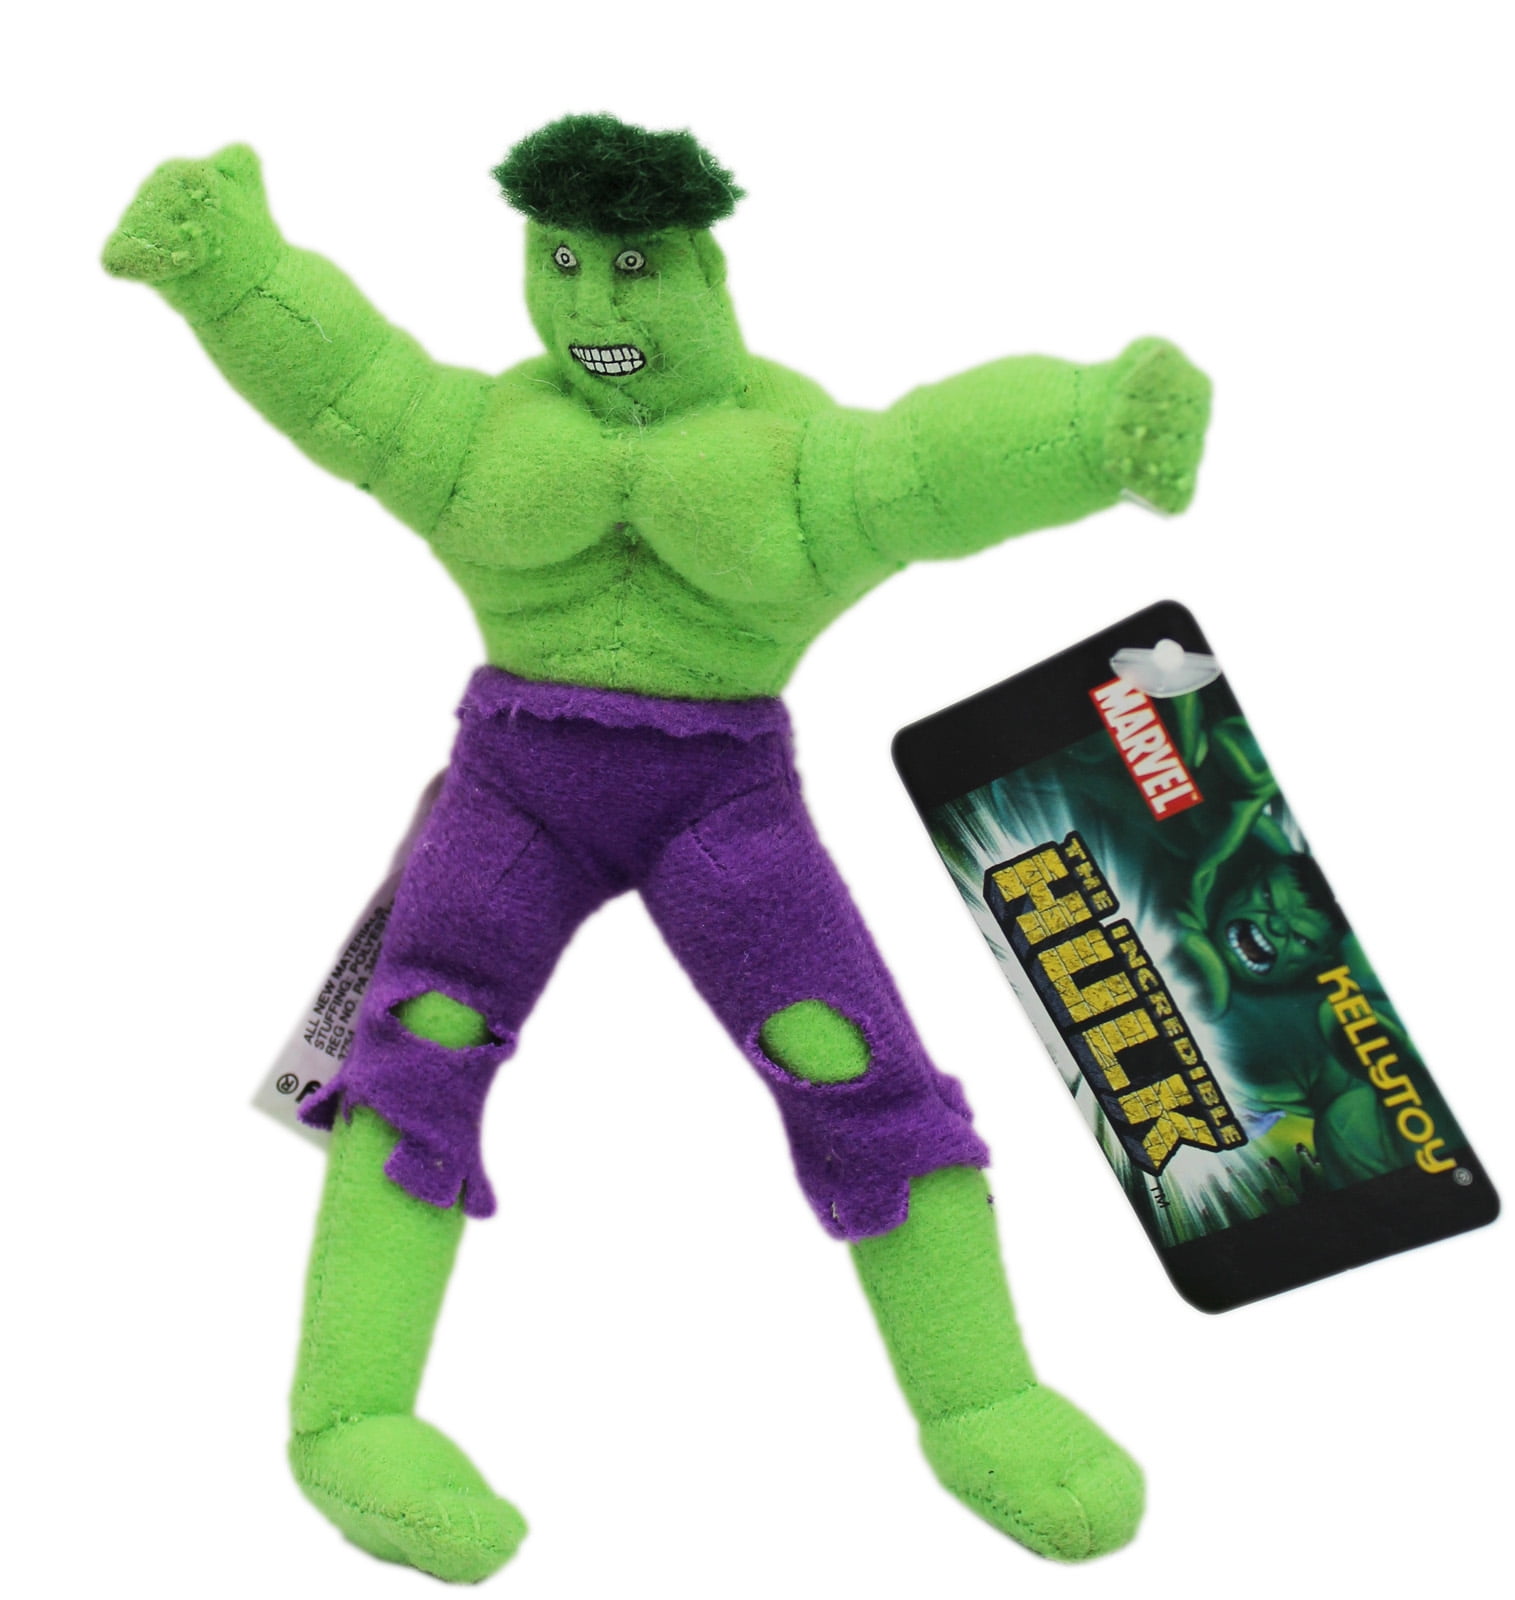 Ty Beanie Baby 6" Marvel Hulk Plush Stuffed Animal Toy Green E118 for sale online 